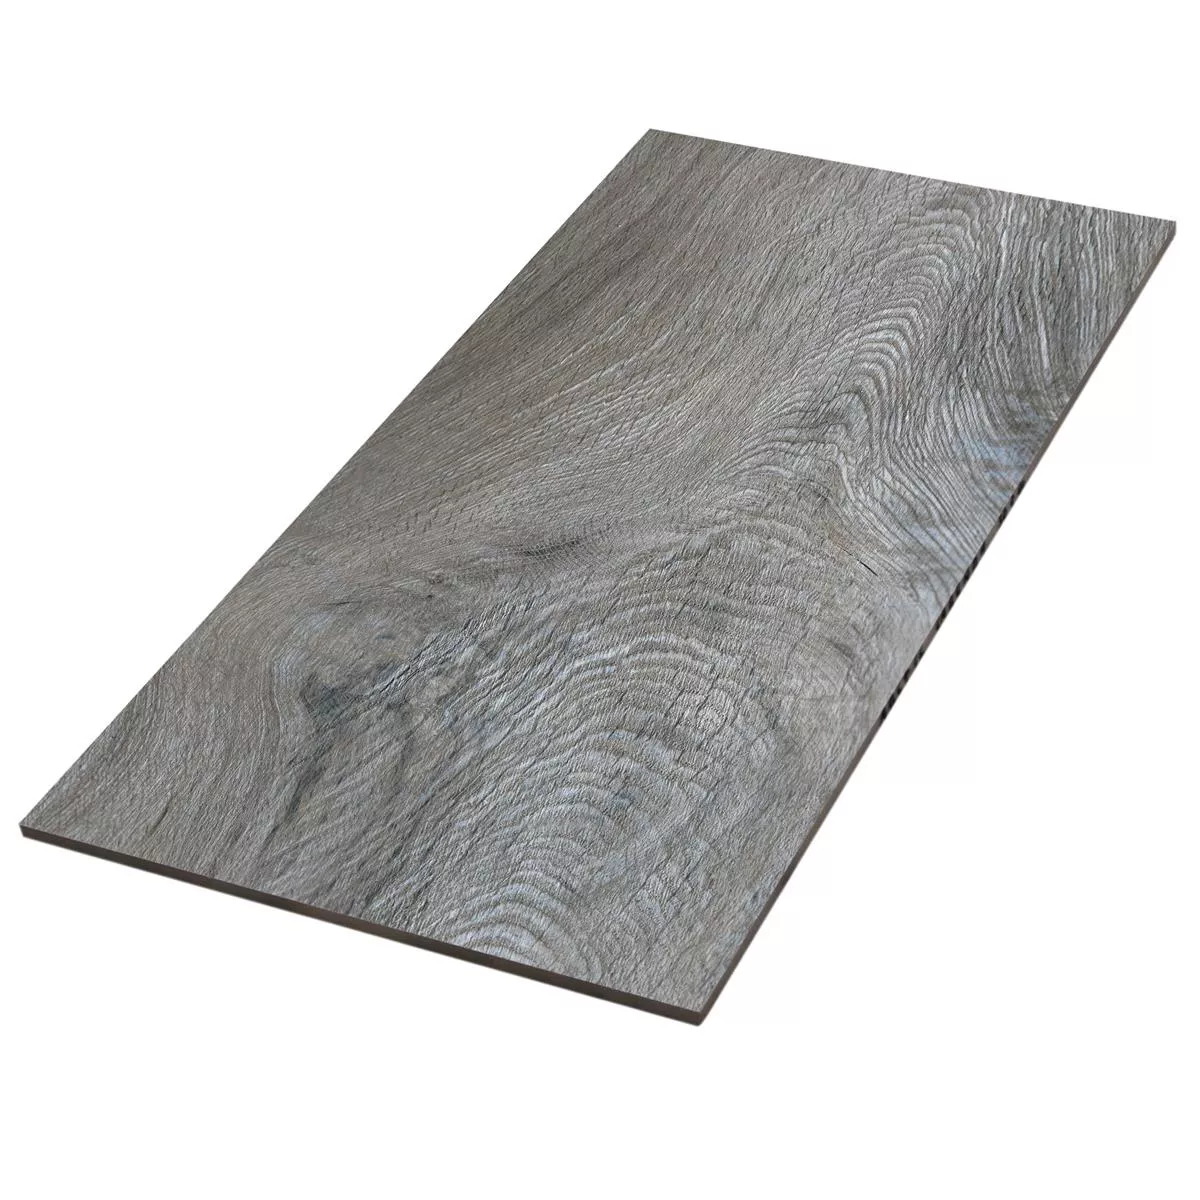 Sample Floor Tiles Goranboy Wood Optic Ash 30x60cm / R10